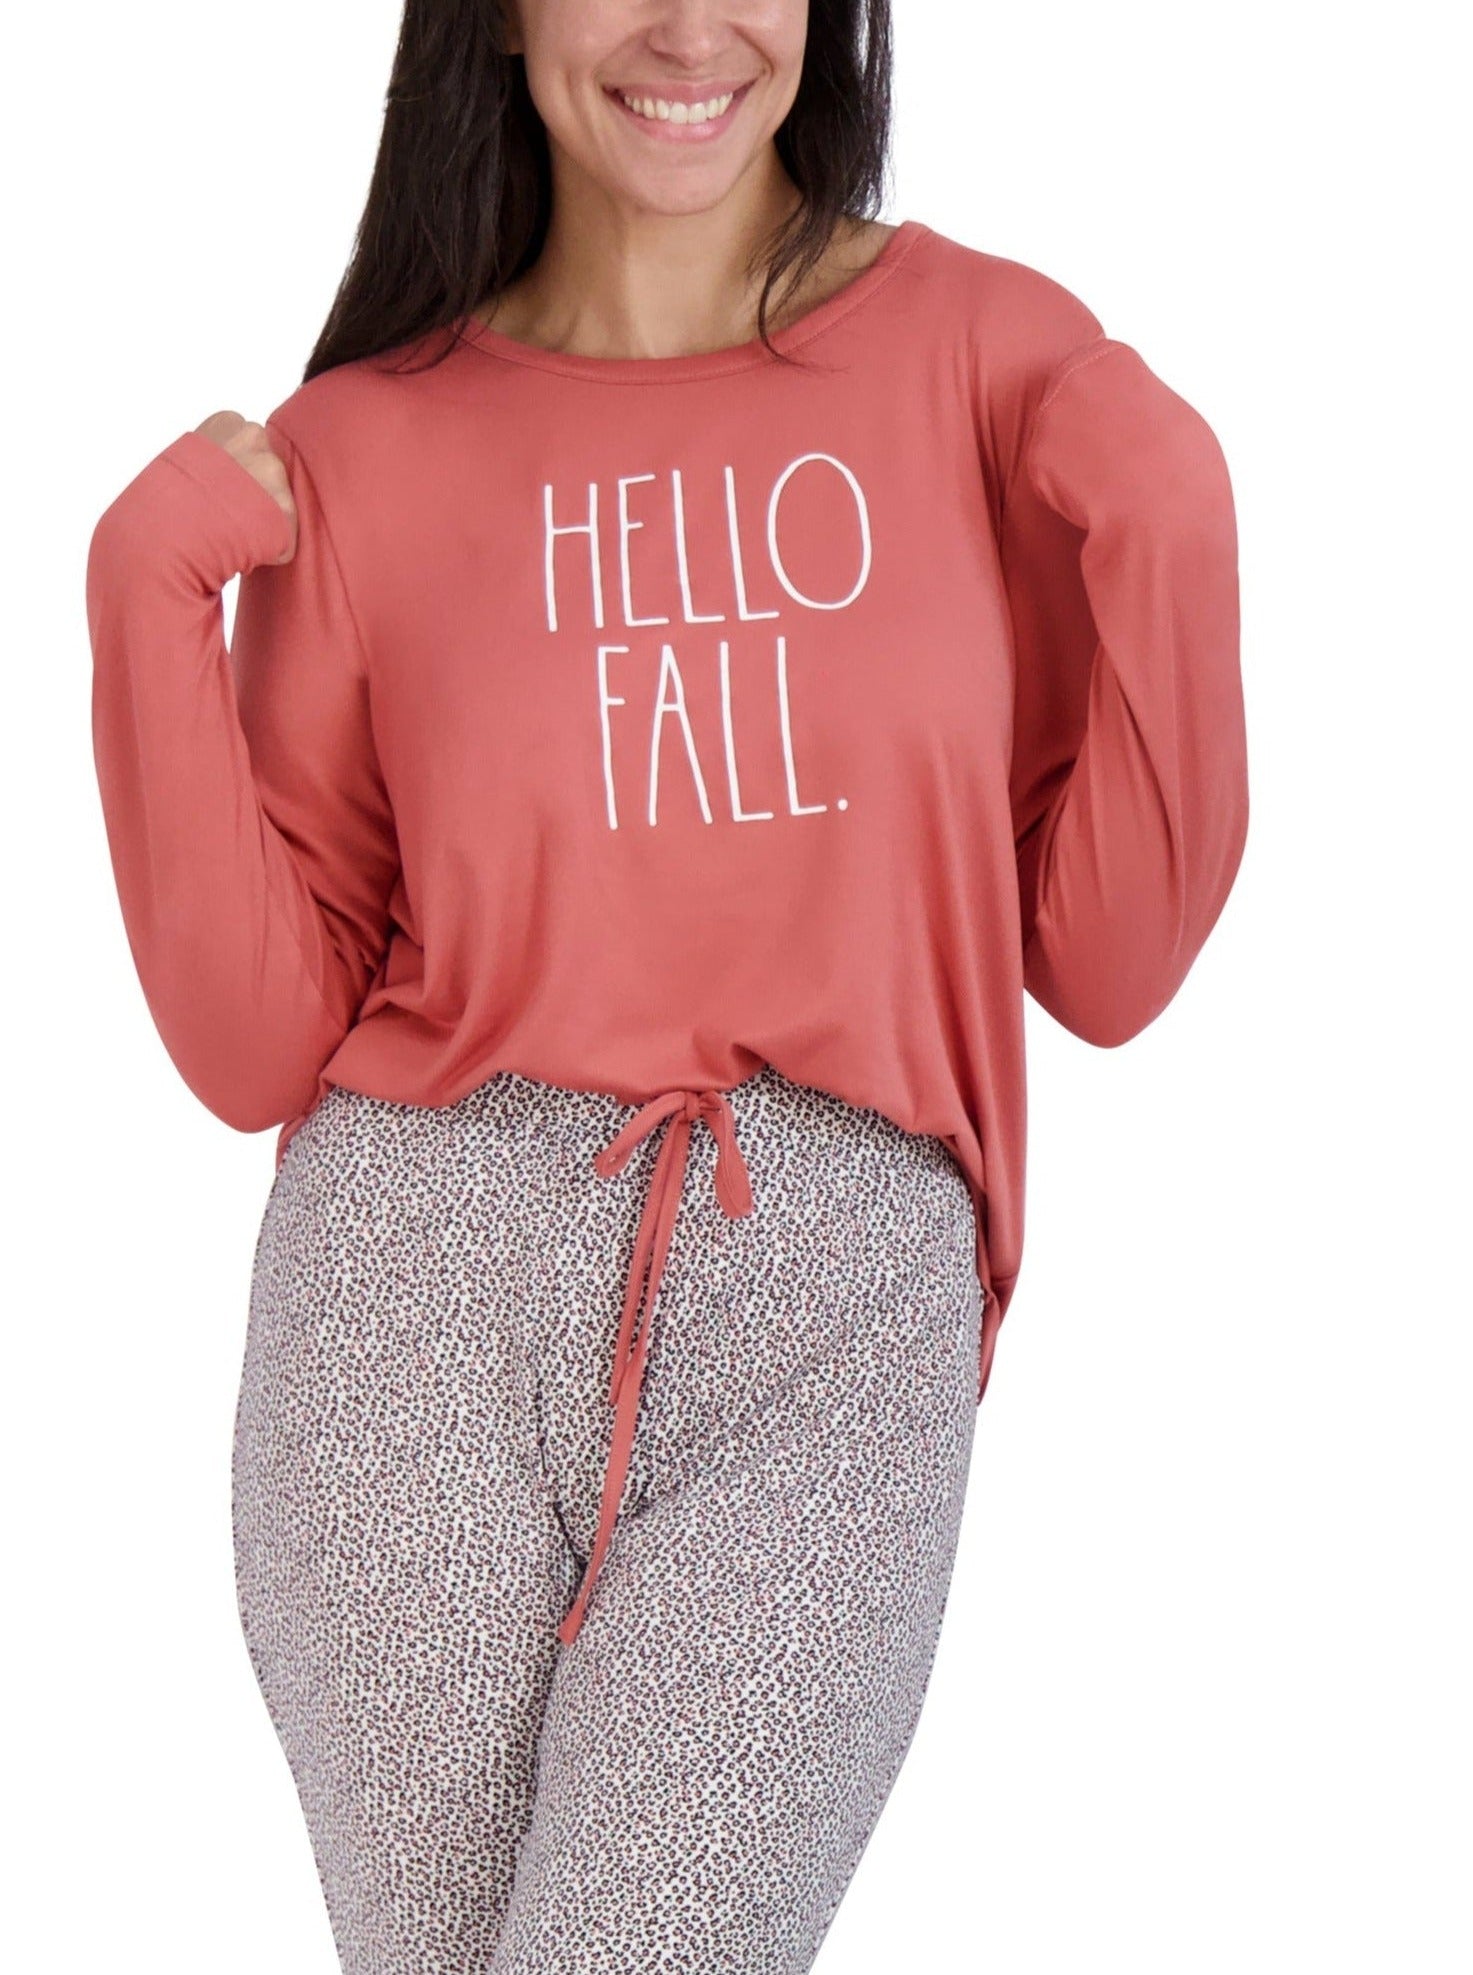 Women's "HELLO FALL" Long Sleeve Top and Drawstring Animal Print Joggers Pajama Set - Rae Dunn Wear